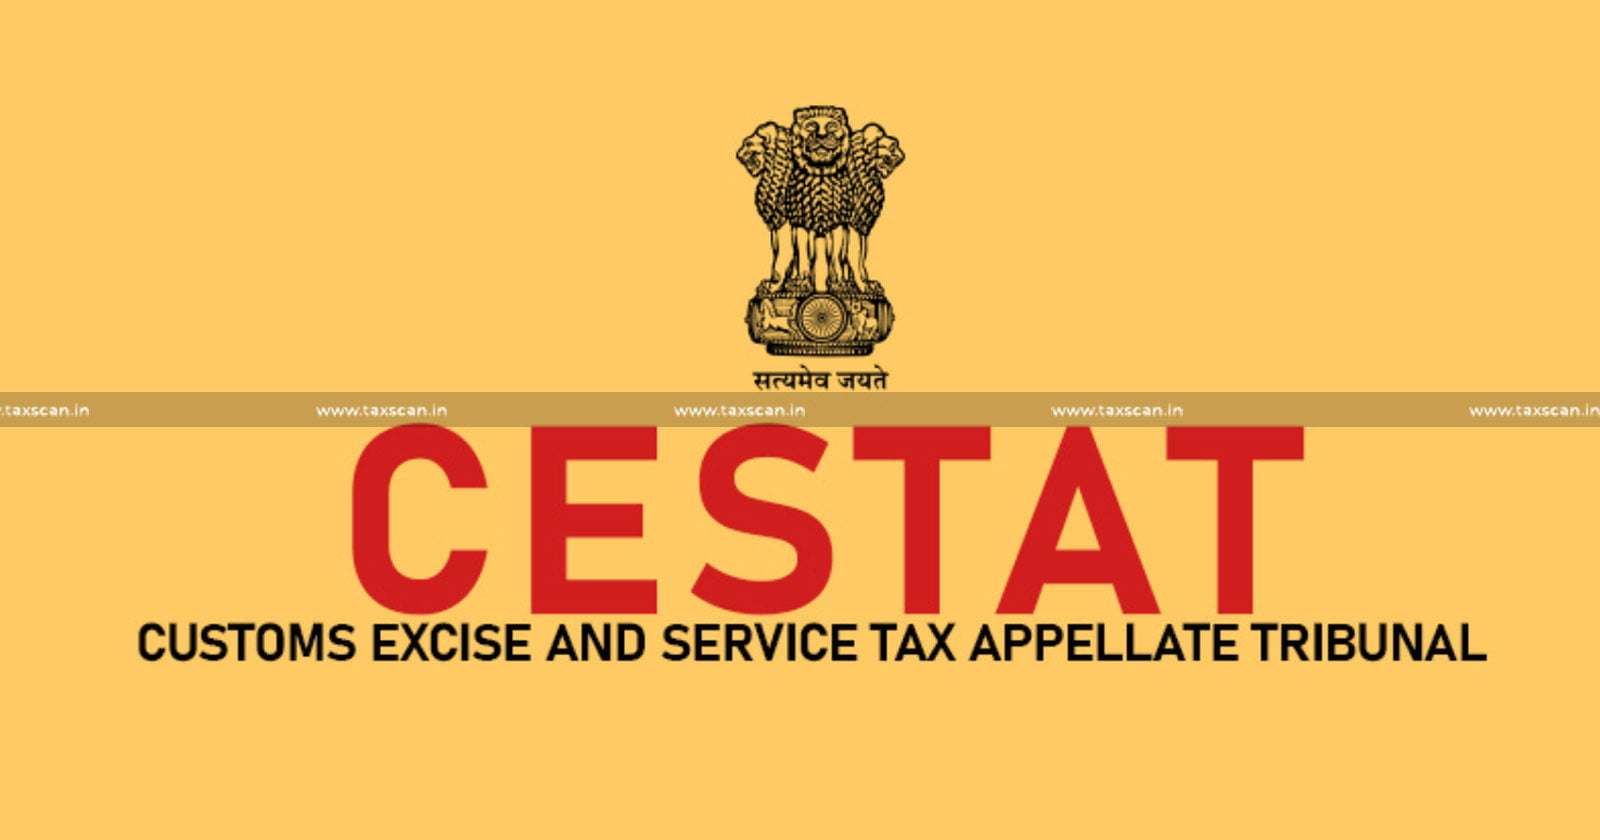 CESTAT Custom- excise- service tax appellate tribunal - Insoluble sulphur - imports sulphur- TAXSCANs